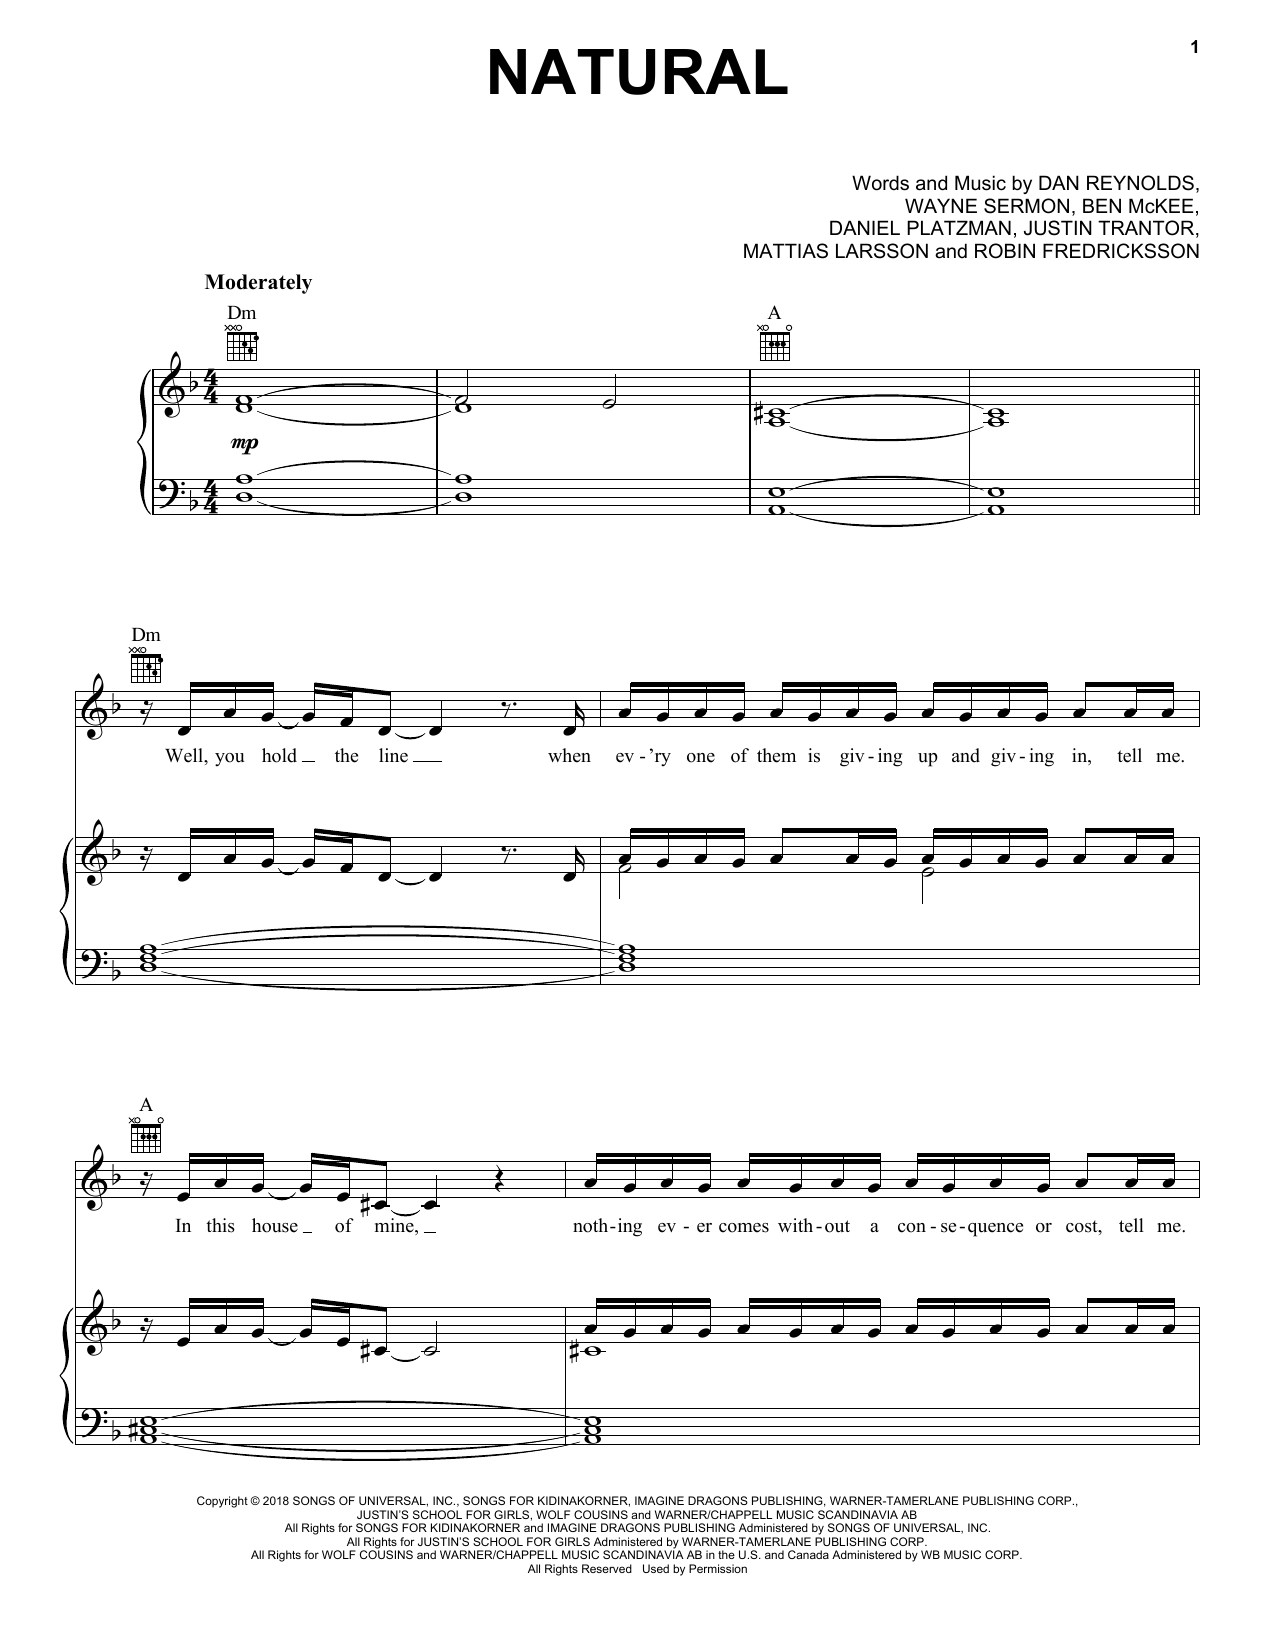 Imagine Dragons Natural Sheet Music Notes & Chords for Big Note Piano - Download or Print PDF